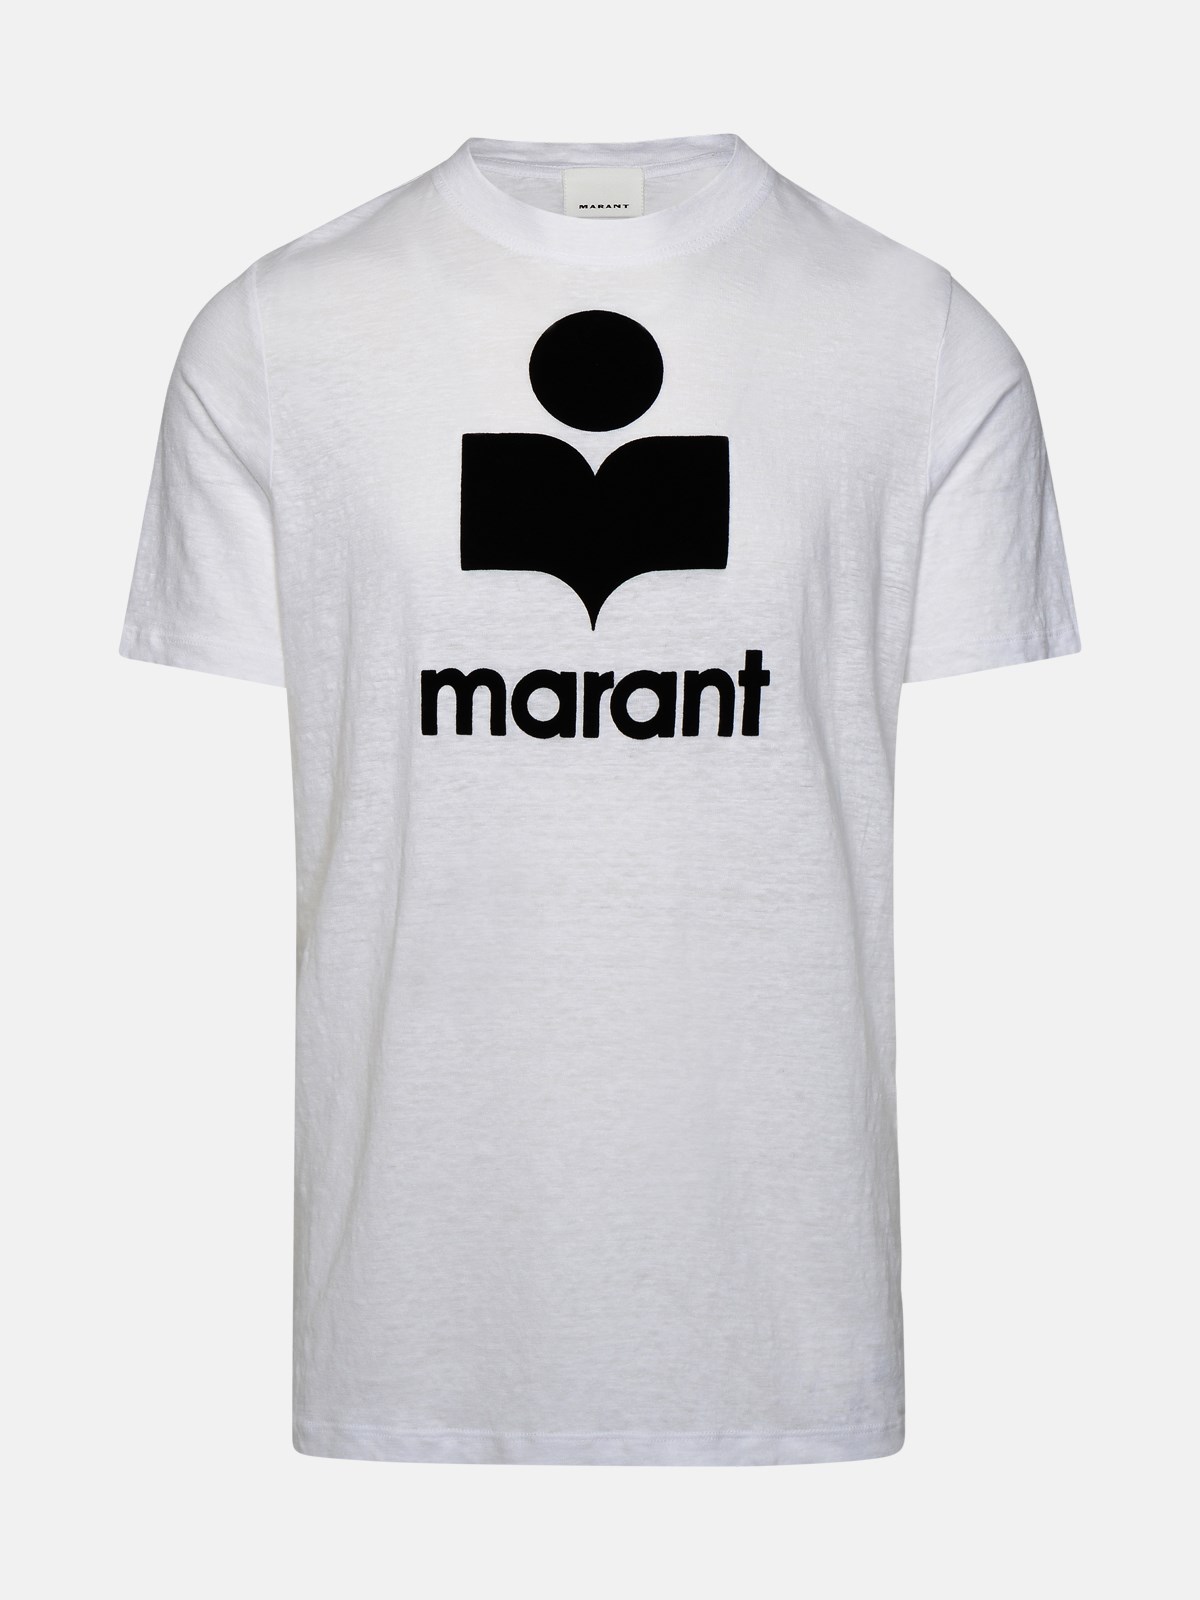 Isabel Marant Kids' 'karman' White Linen T-shirt